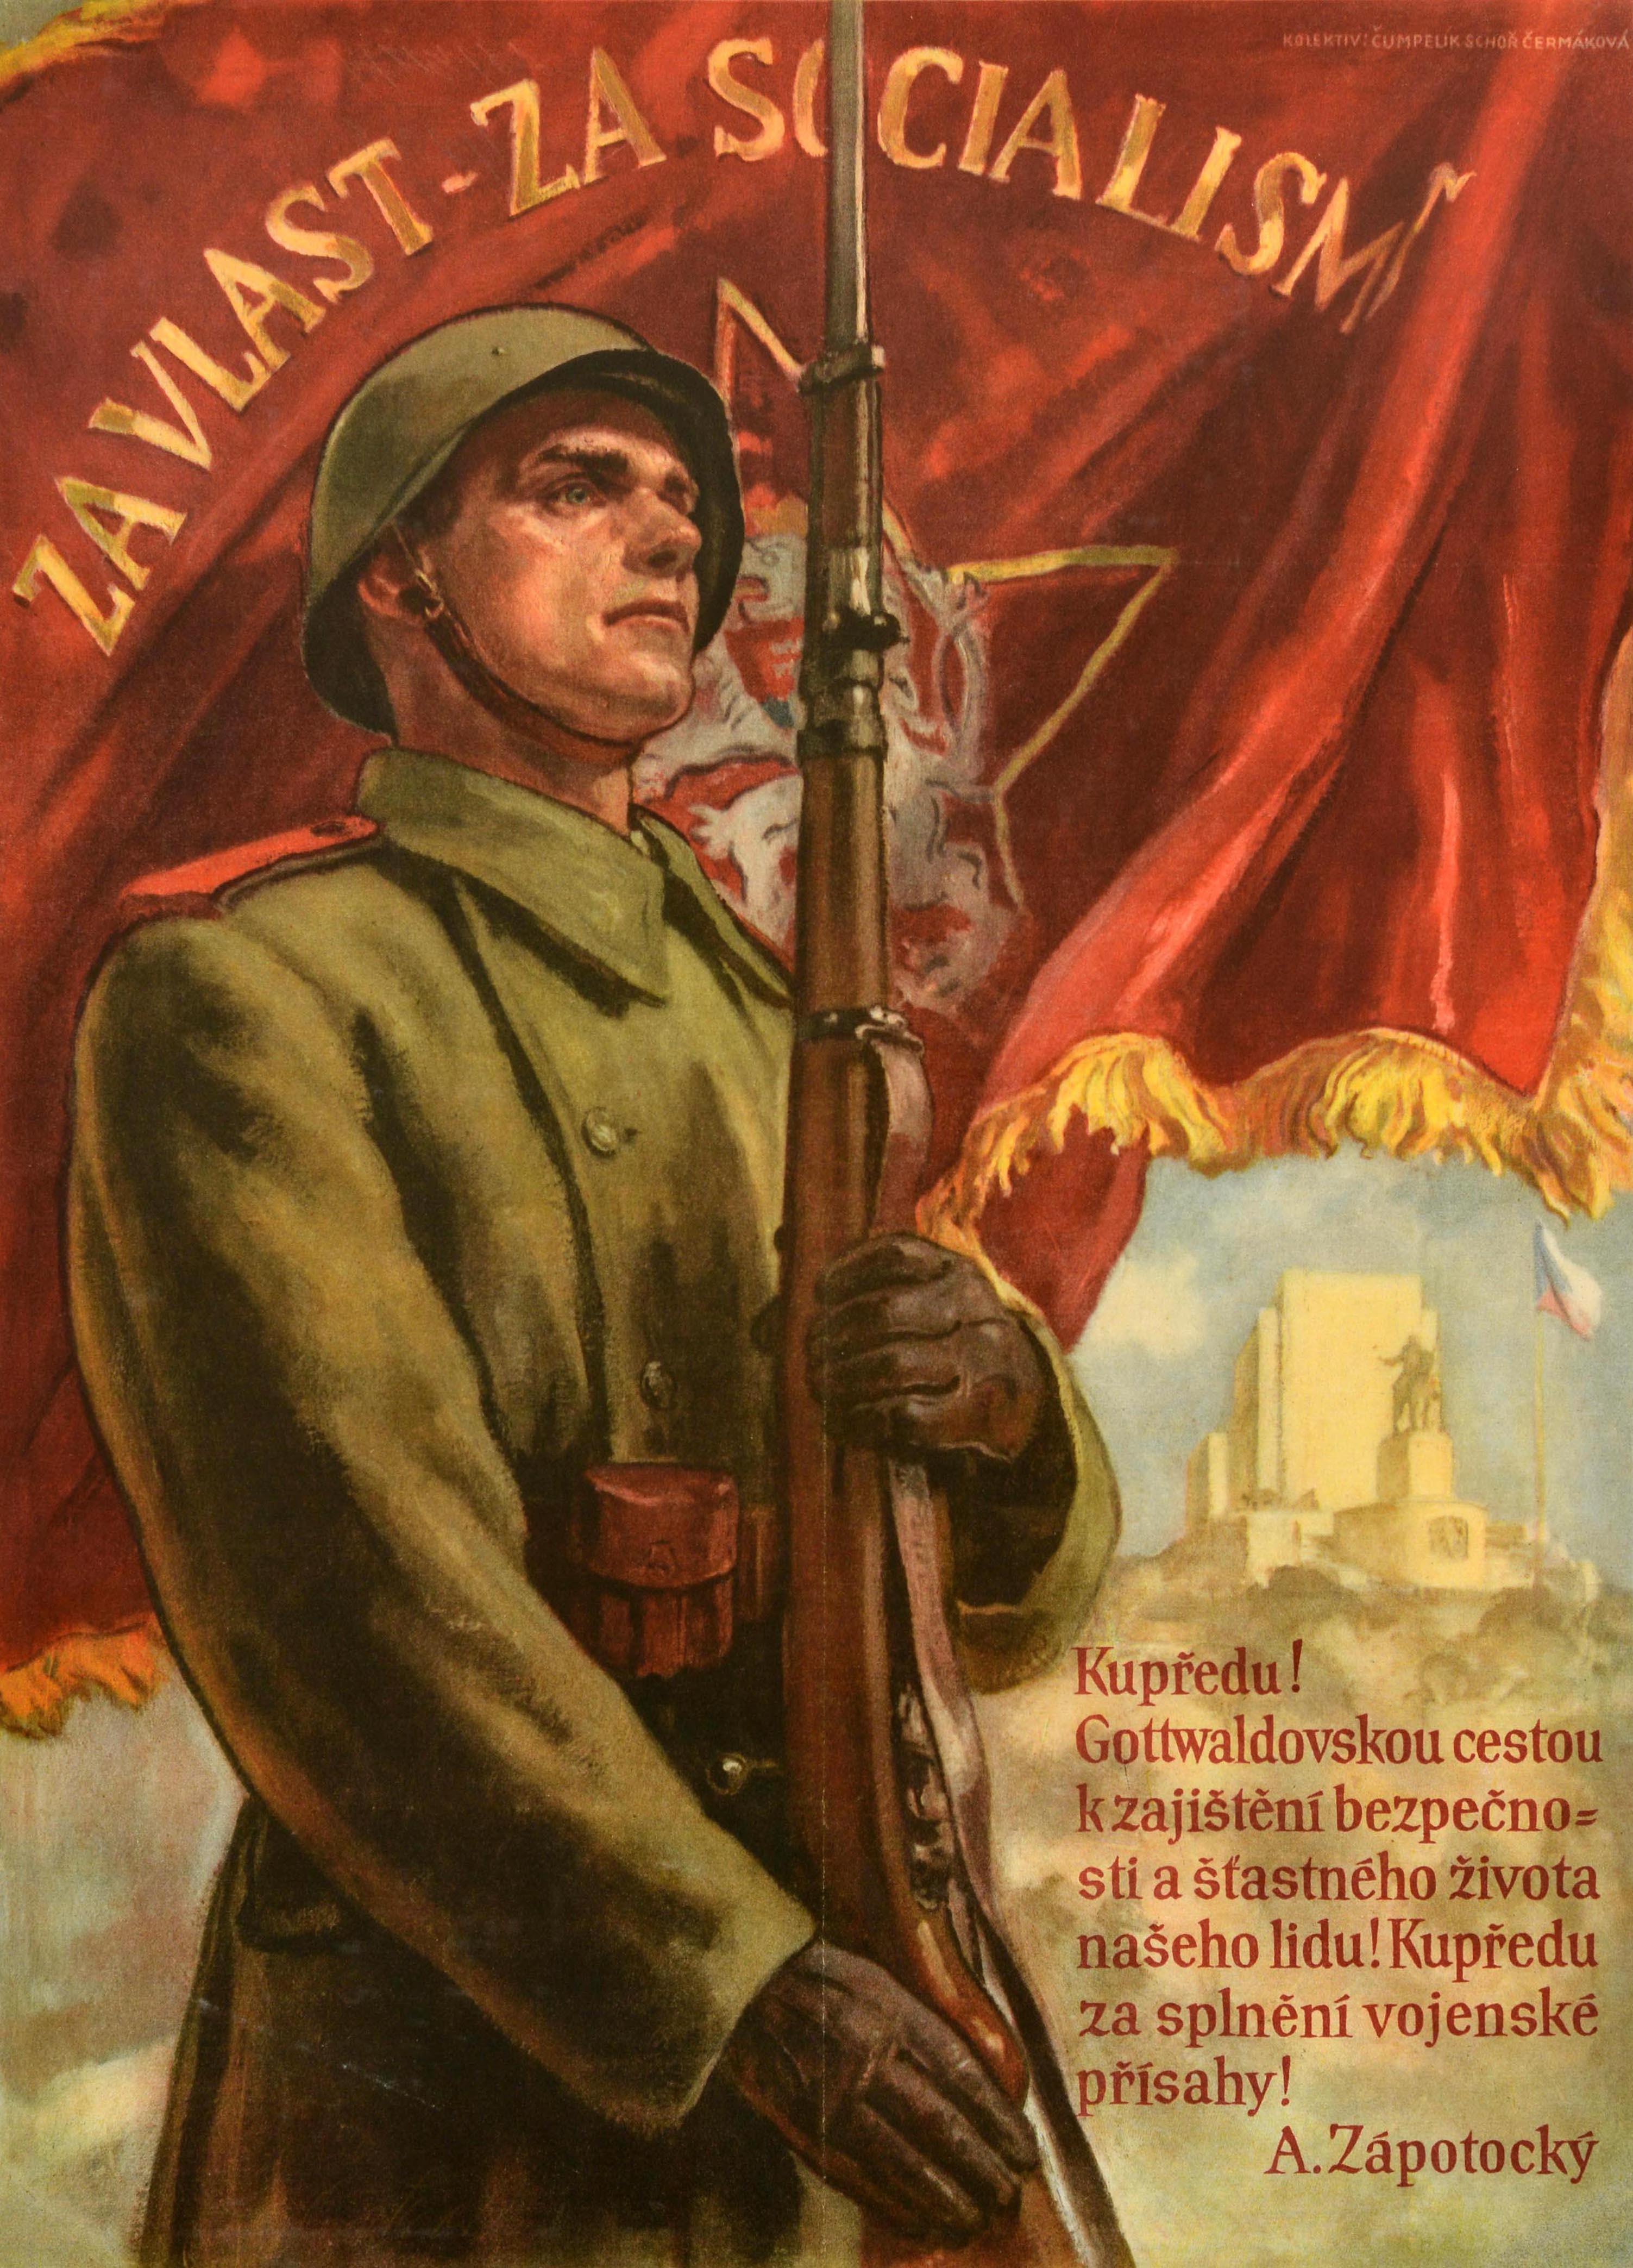 Original Vintage Czechoslovak Propaganda Poster For Motherland For Socialism - Print by Unknown